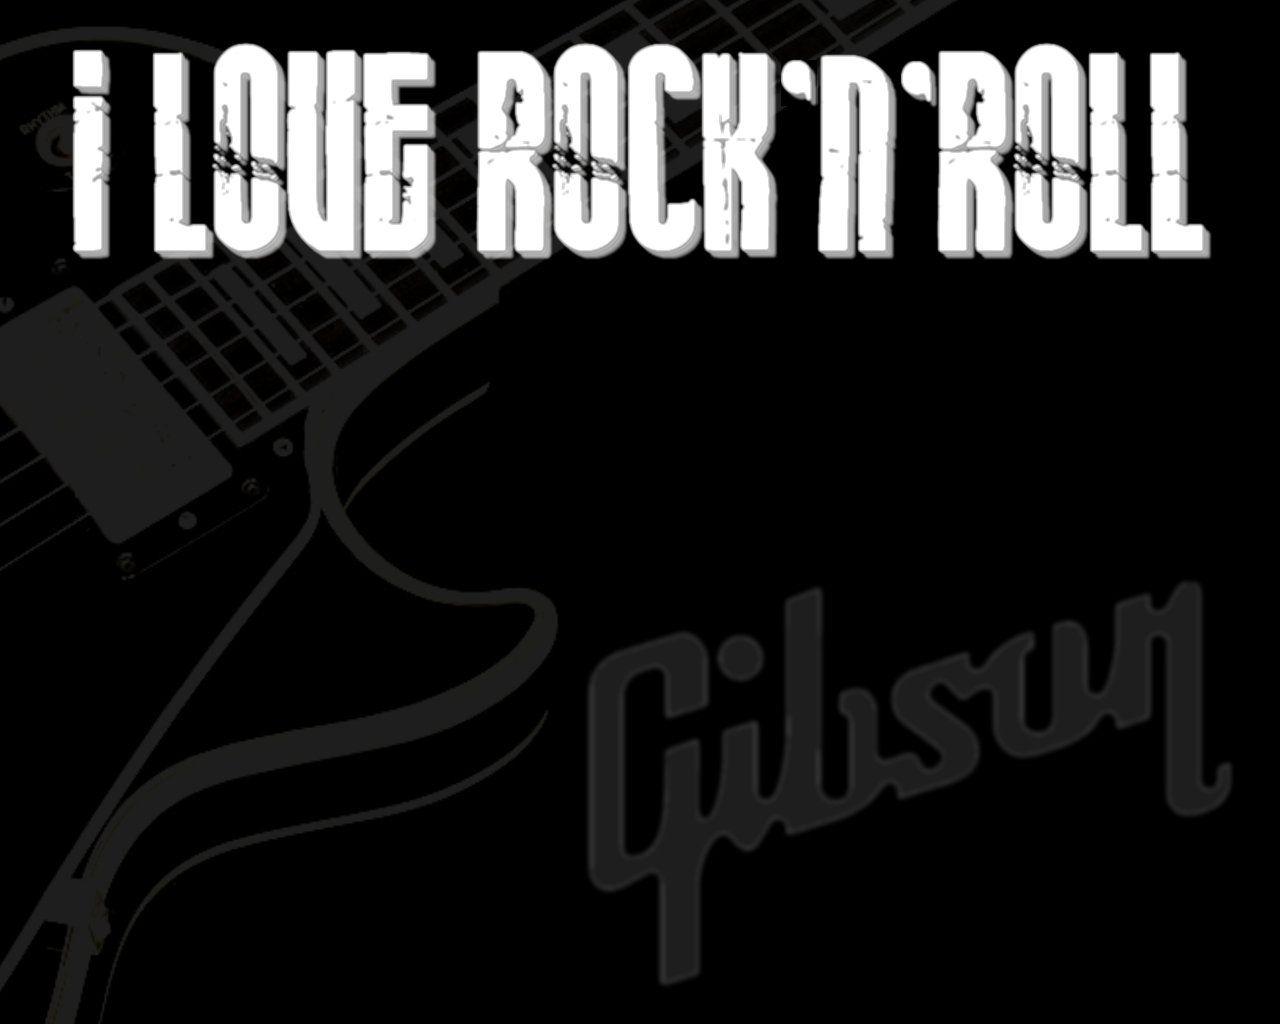 I love rock'n'roll 3 gibson